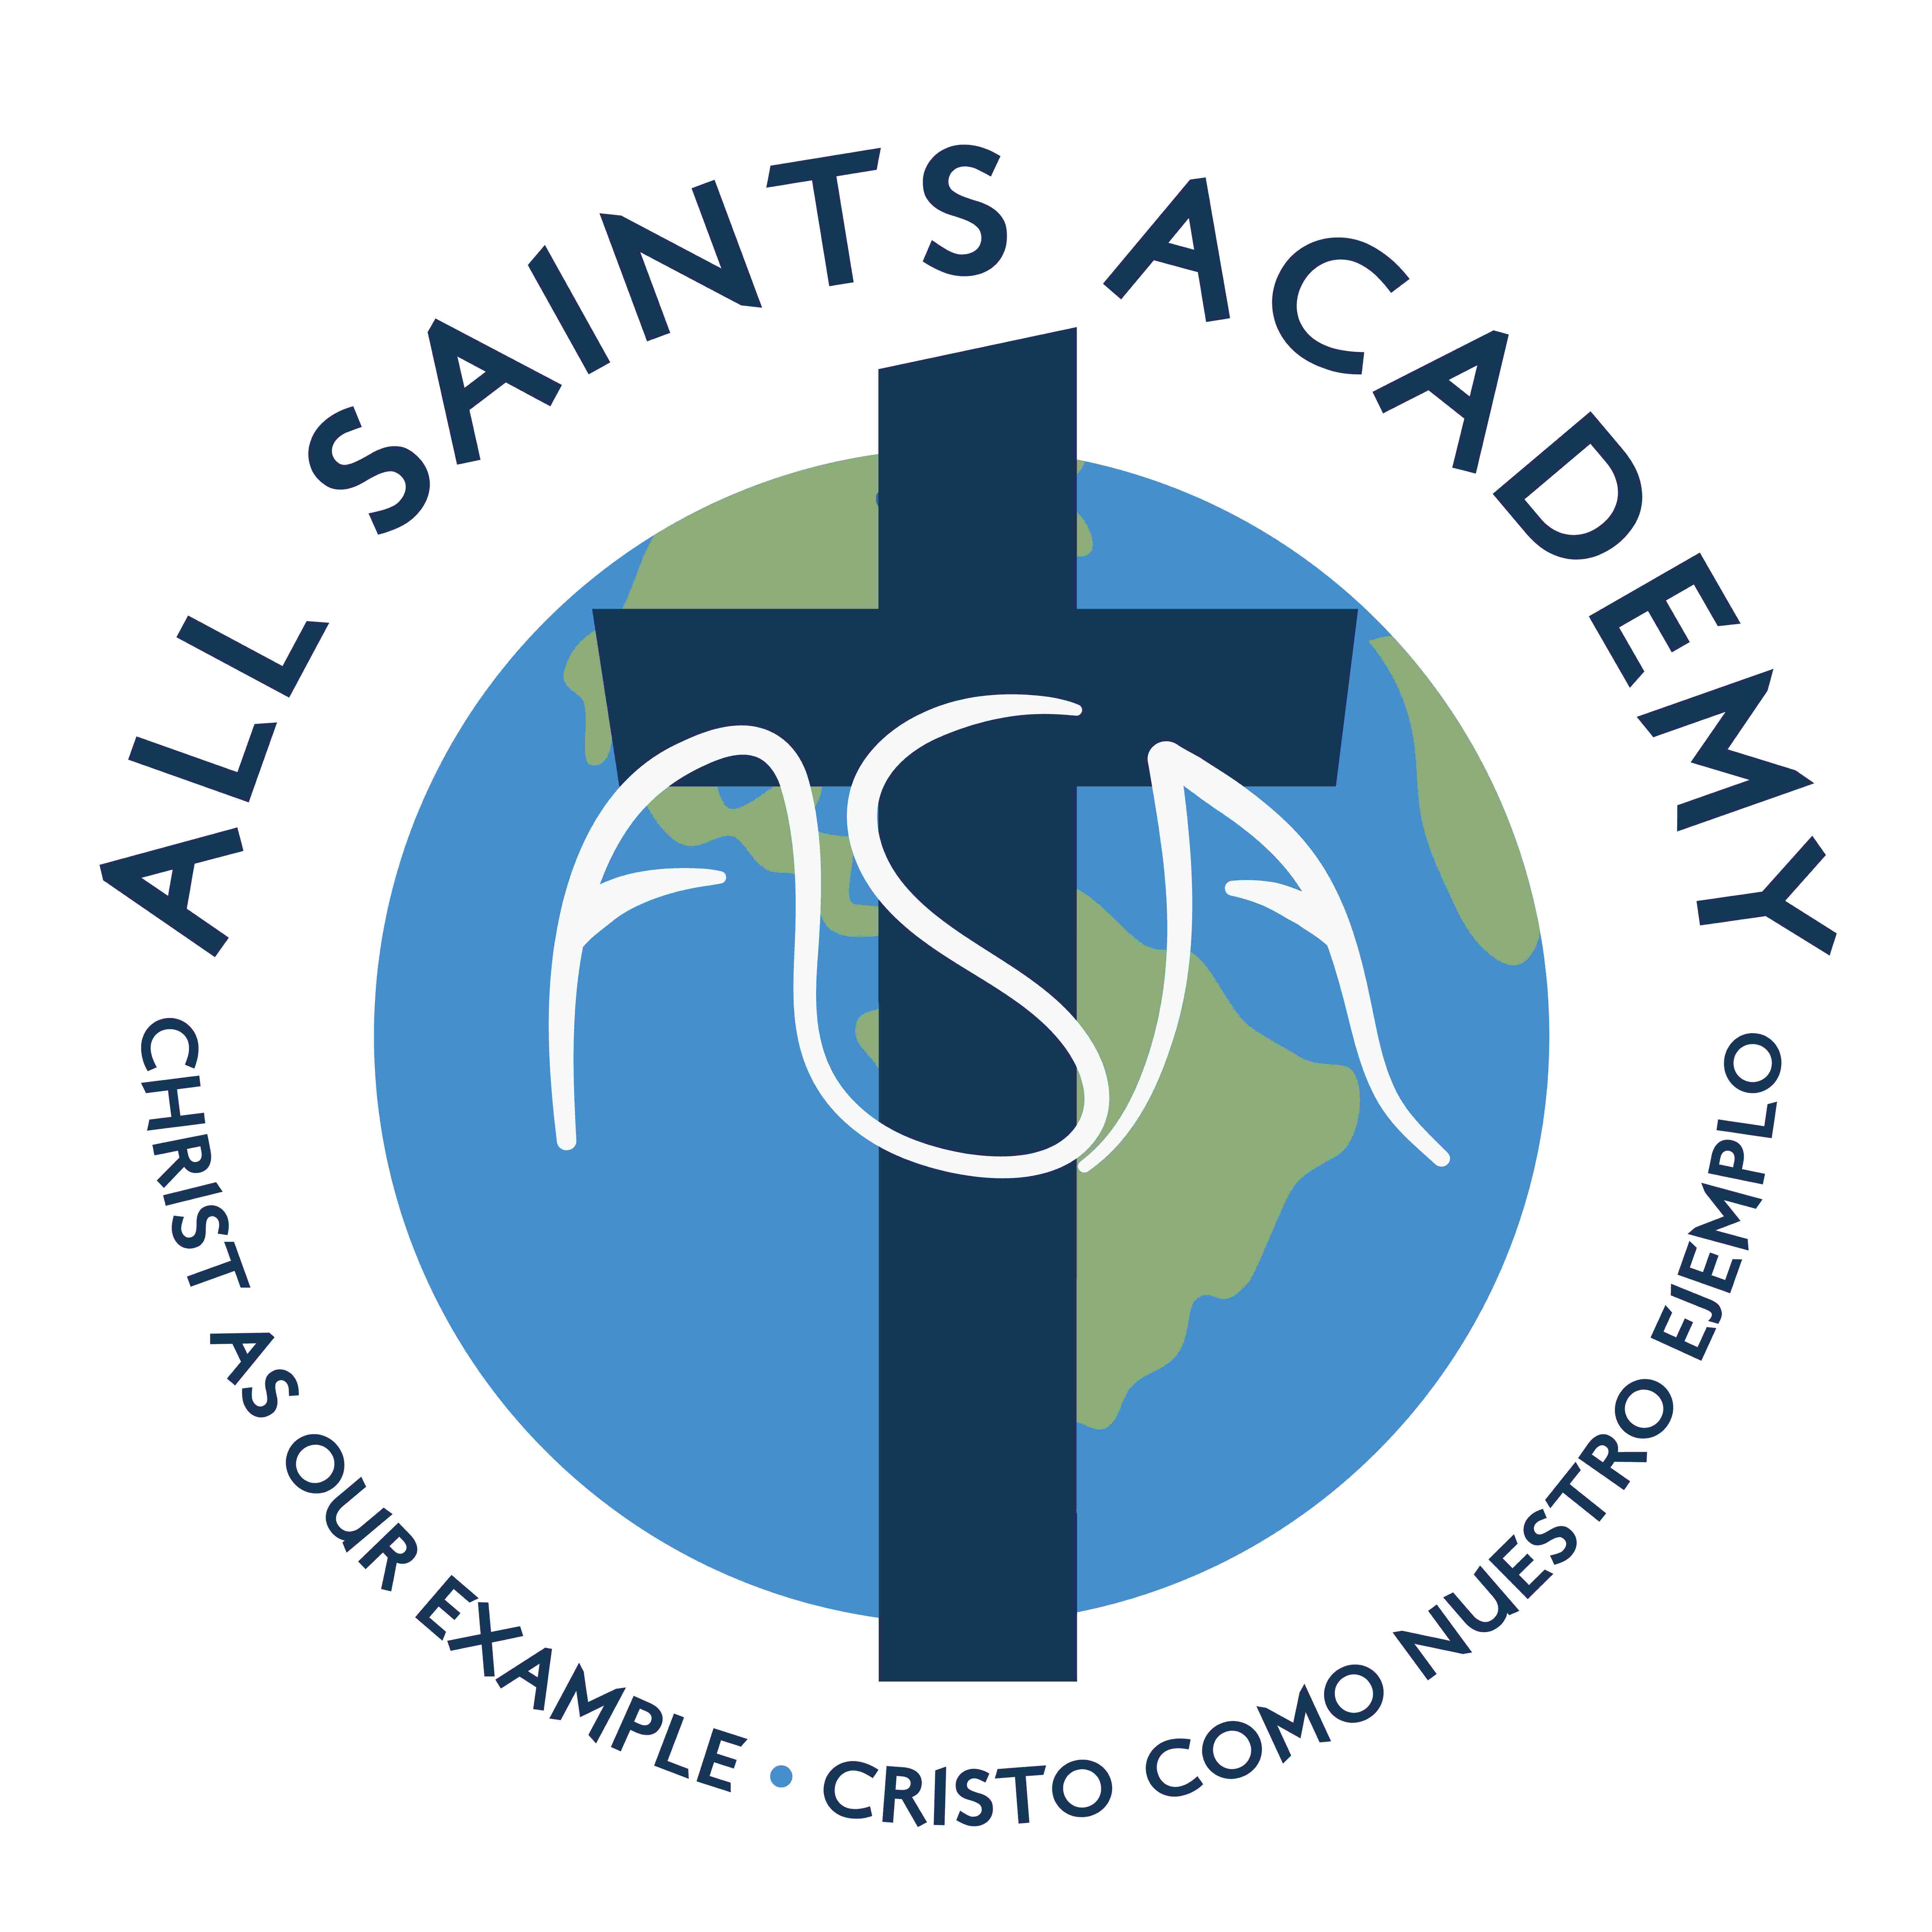 All Saints Academy logo